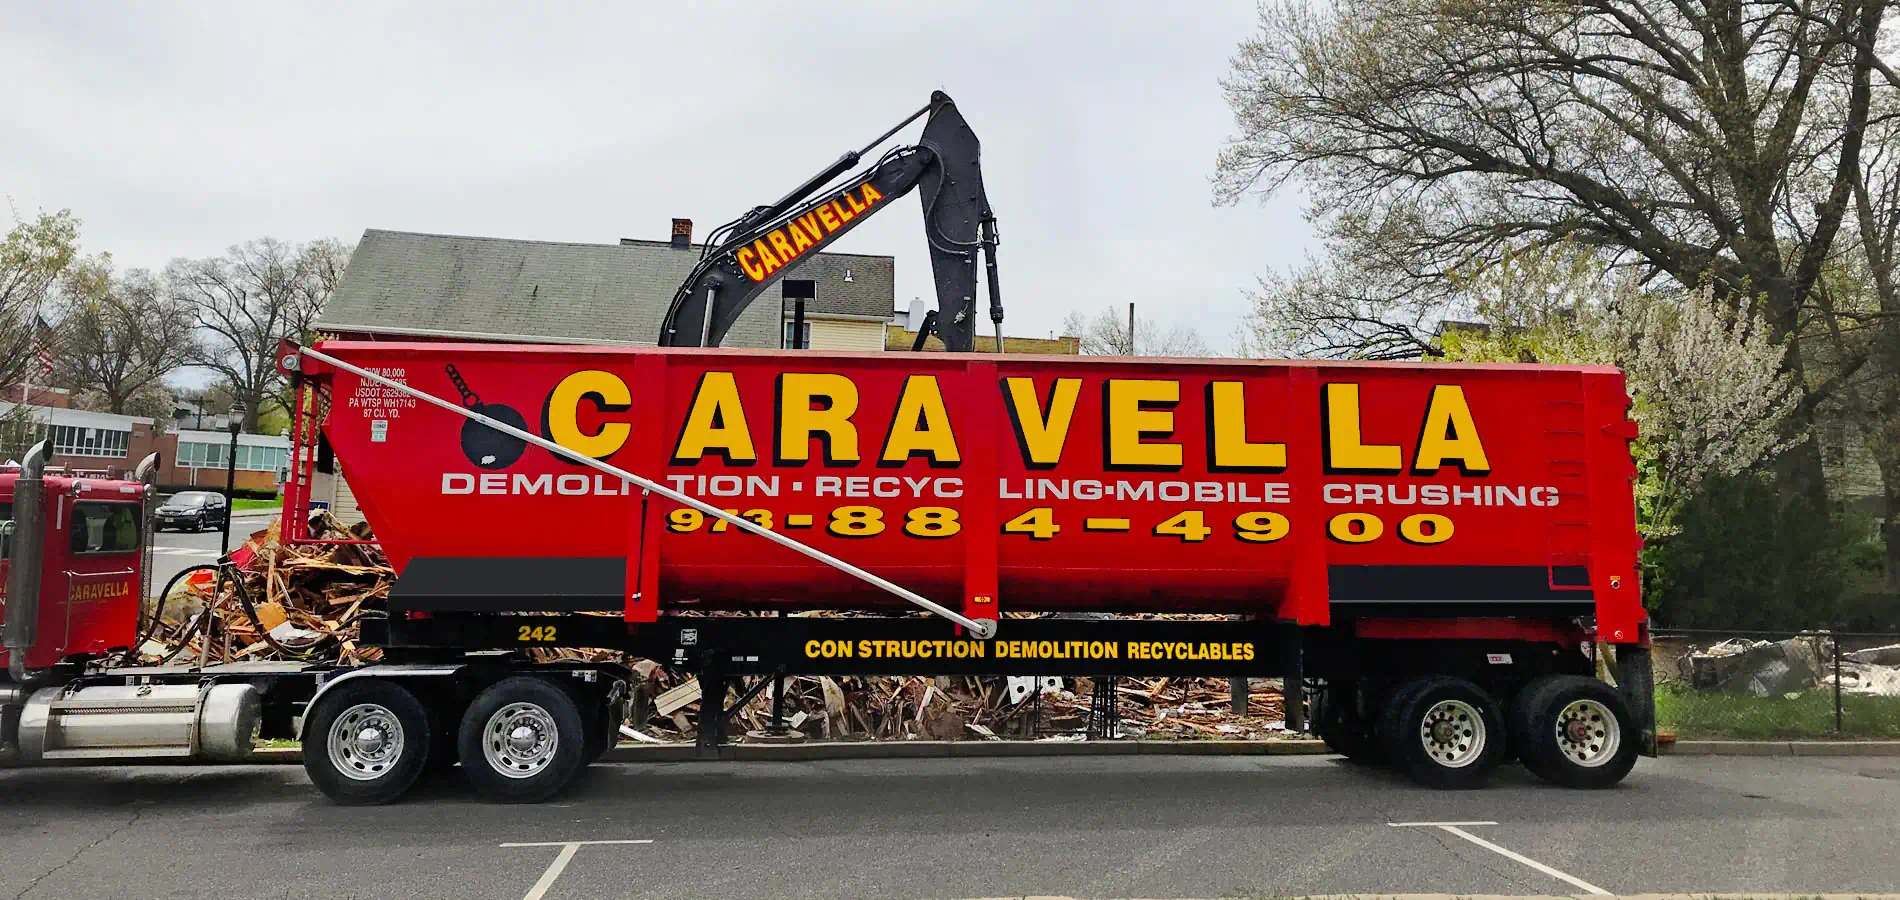 Demolition Services in Clifton, NJ | Caravella Demolition